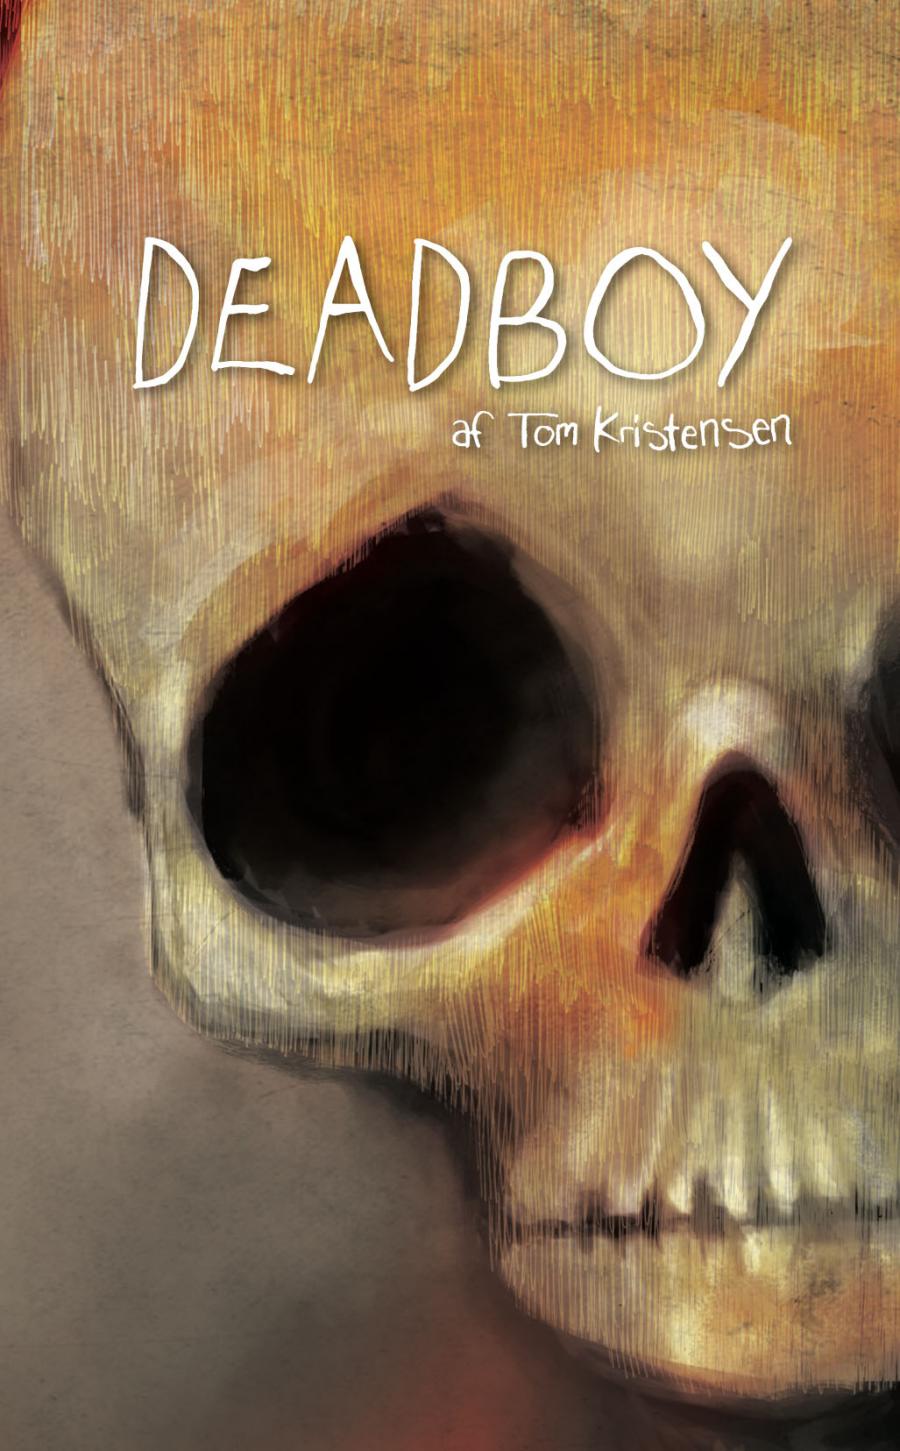 Deadboy af Tom Kristensen